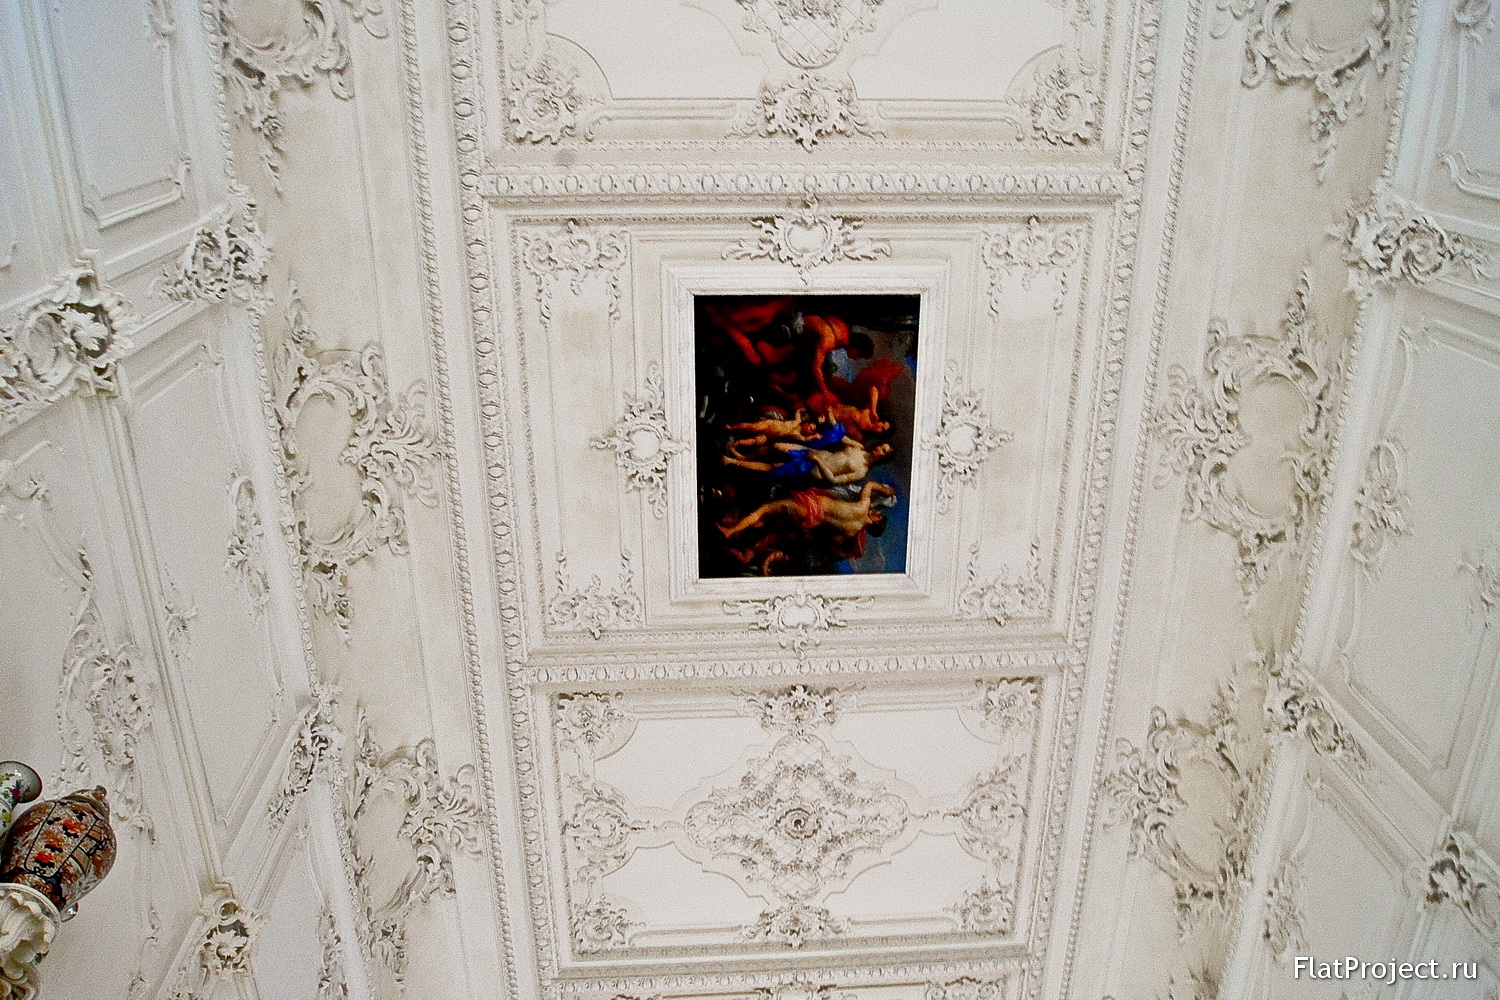 The Catherine Palace interiors – photo 6